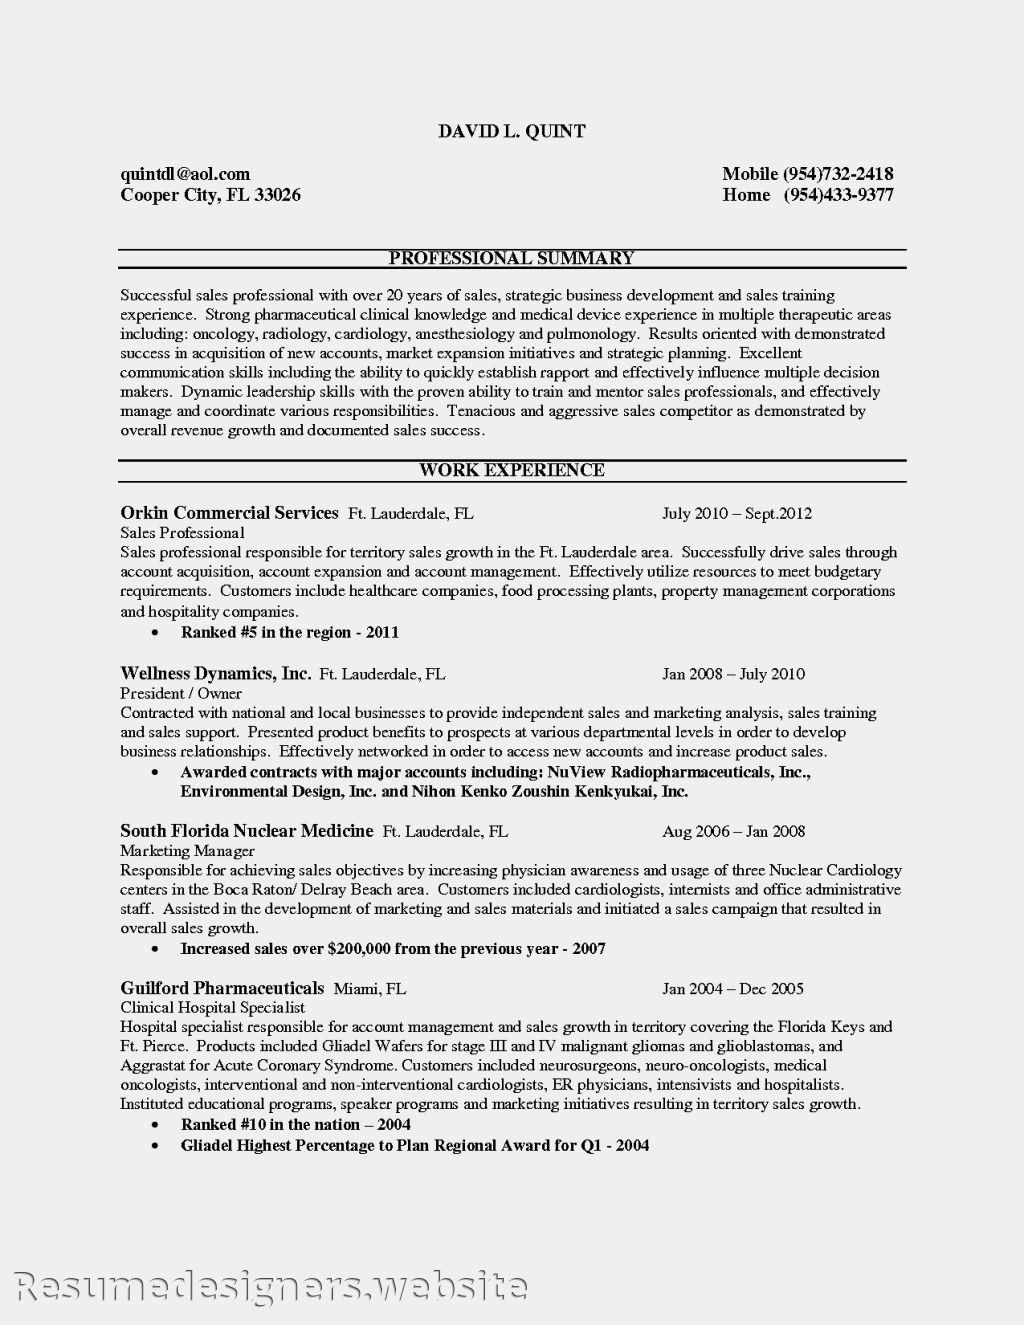 716 resume for medical sales entry level